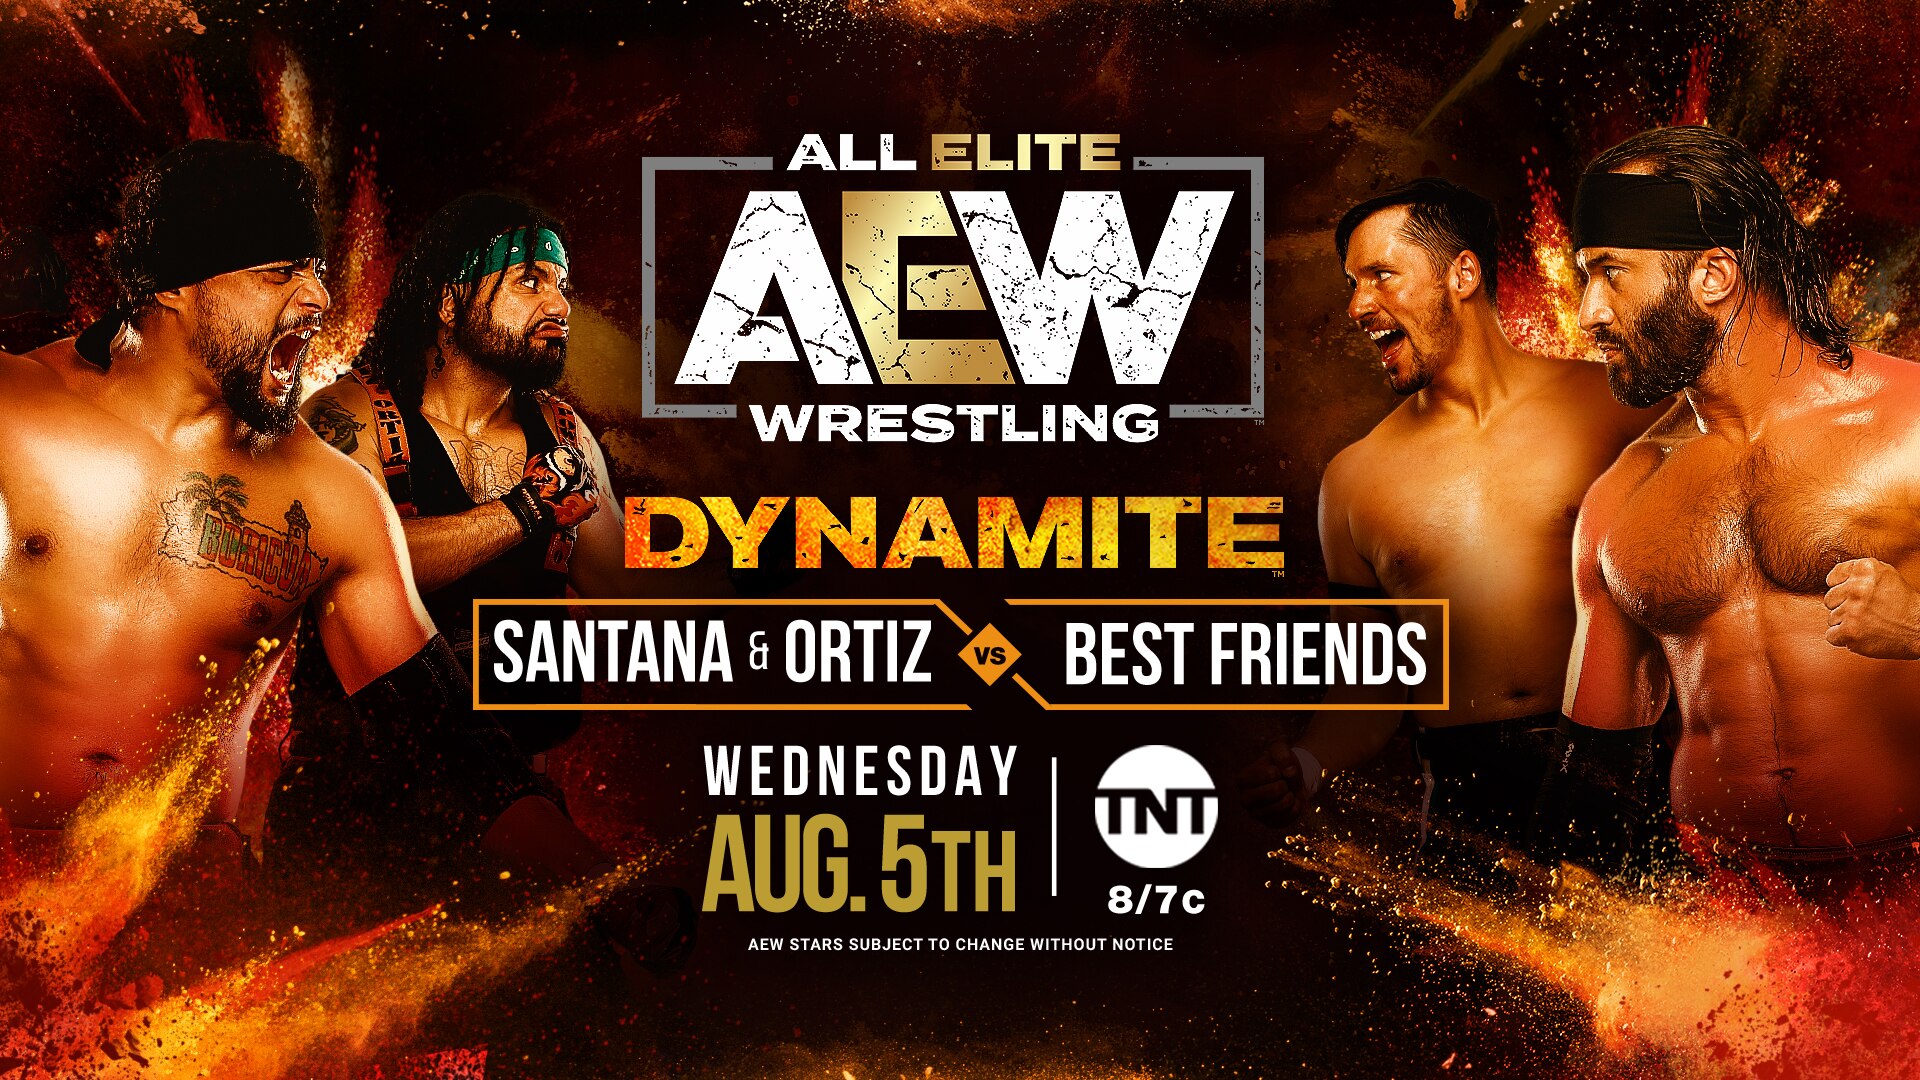 Santana & Ortiz vs Best Friends